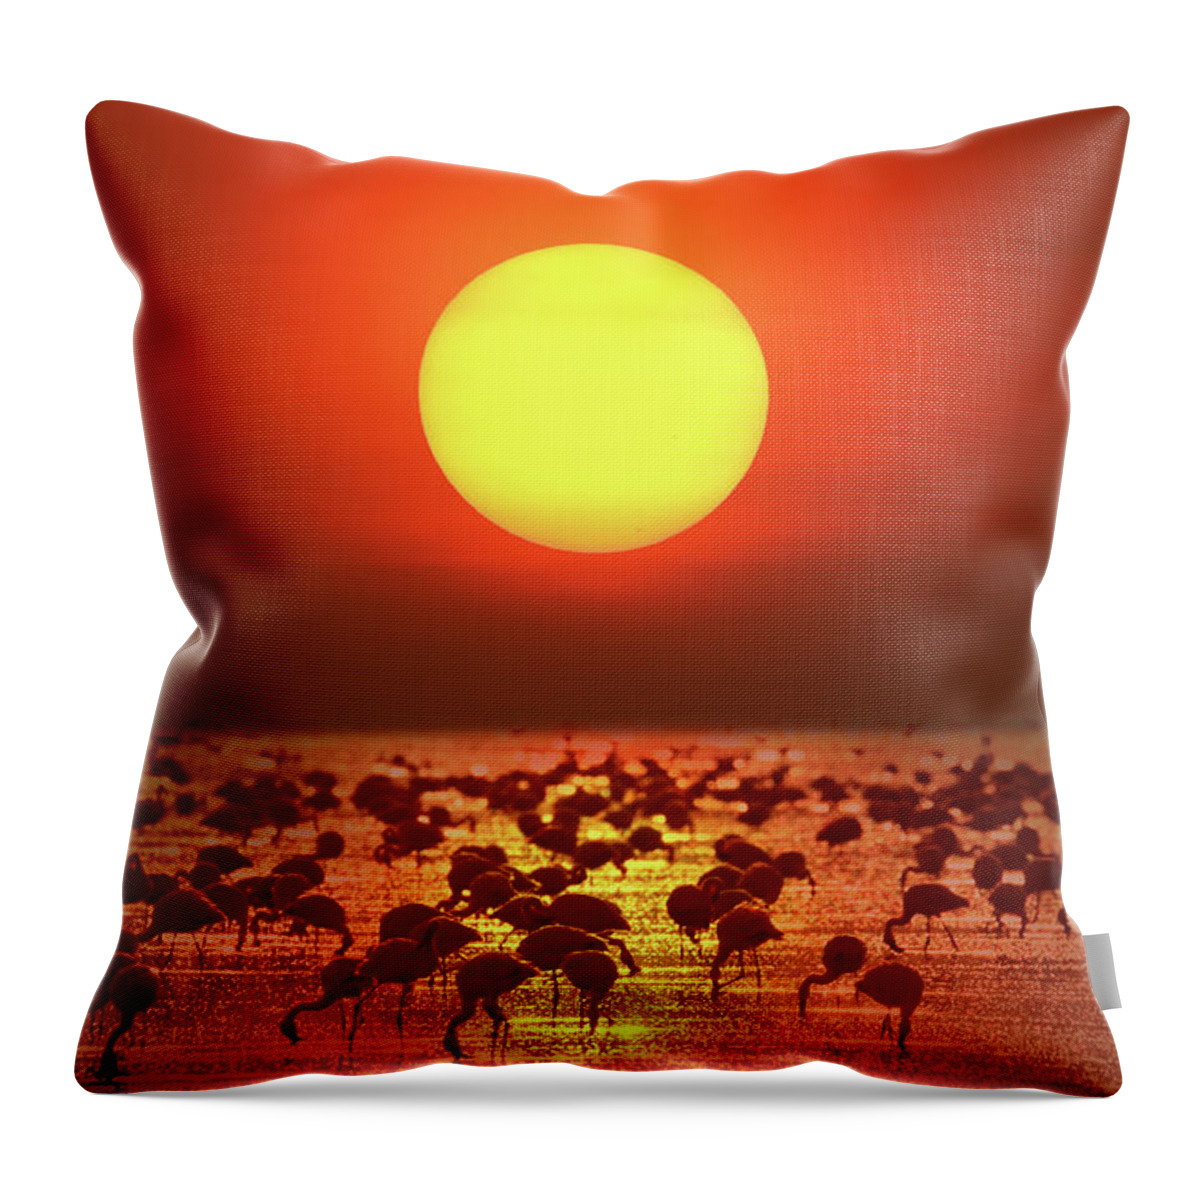 Scenics Throw Pillow featuring the photograph Big Sunset & Flamingo by Photo By Prasit Chansareekorn